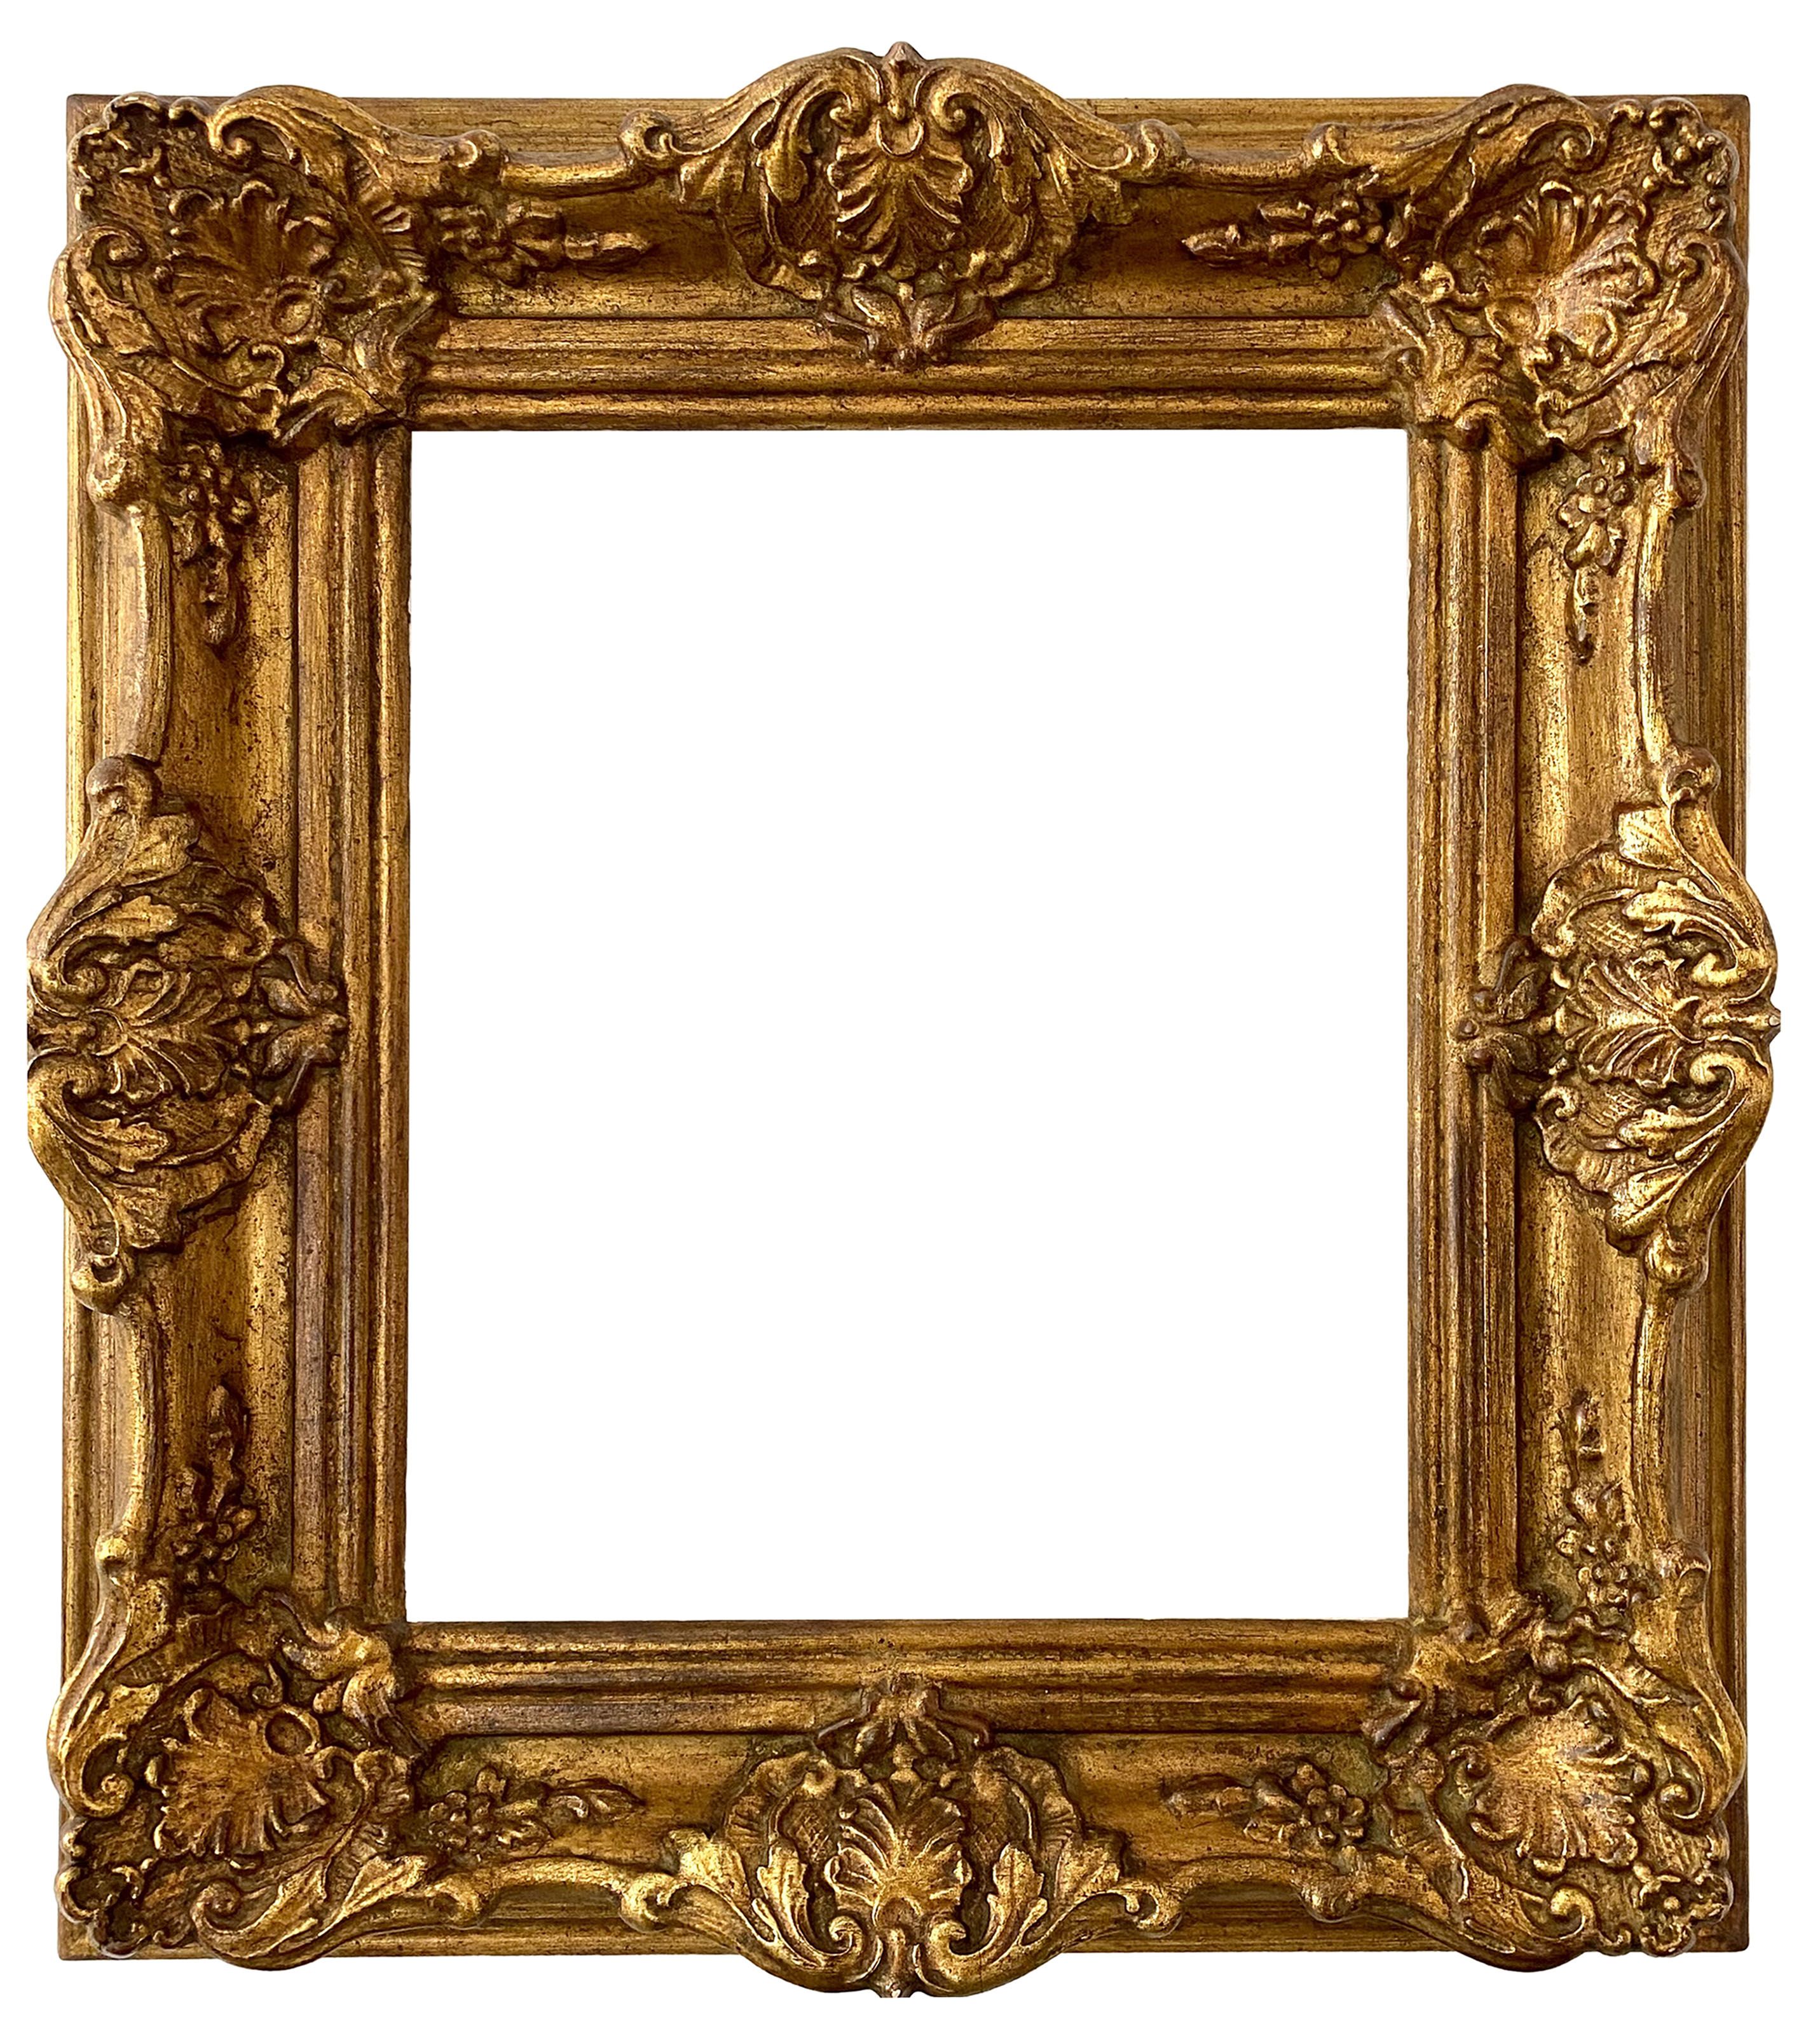 Cadre style Louis XIV - 29,10 x 24,50 - REF - 443